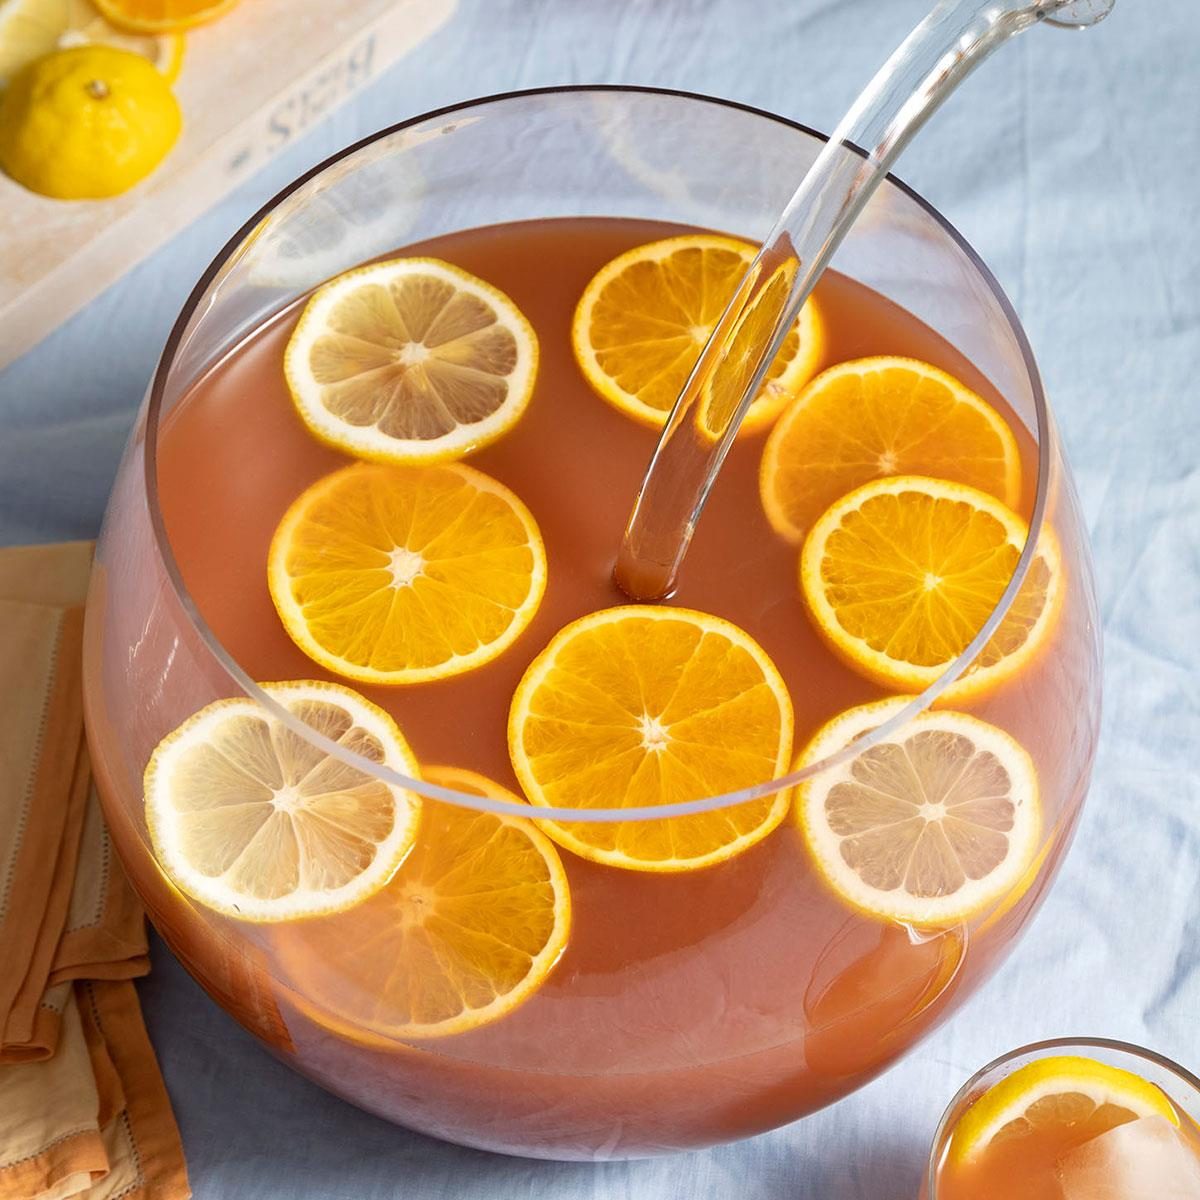 Fruit Punch Recipe With Orange Juice and Lemonade